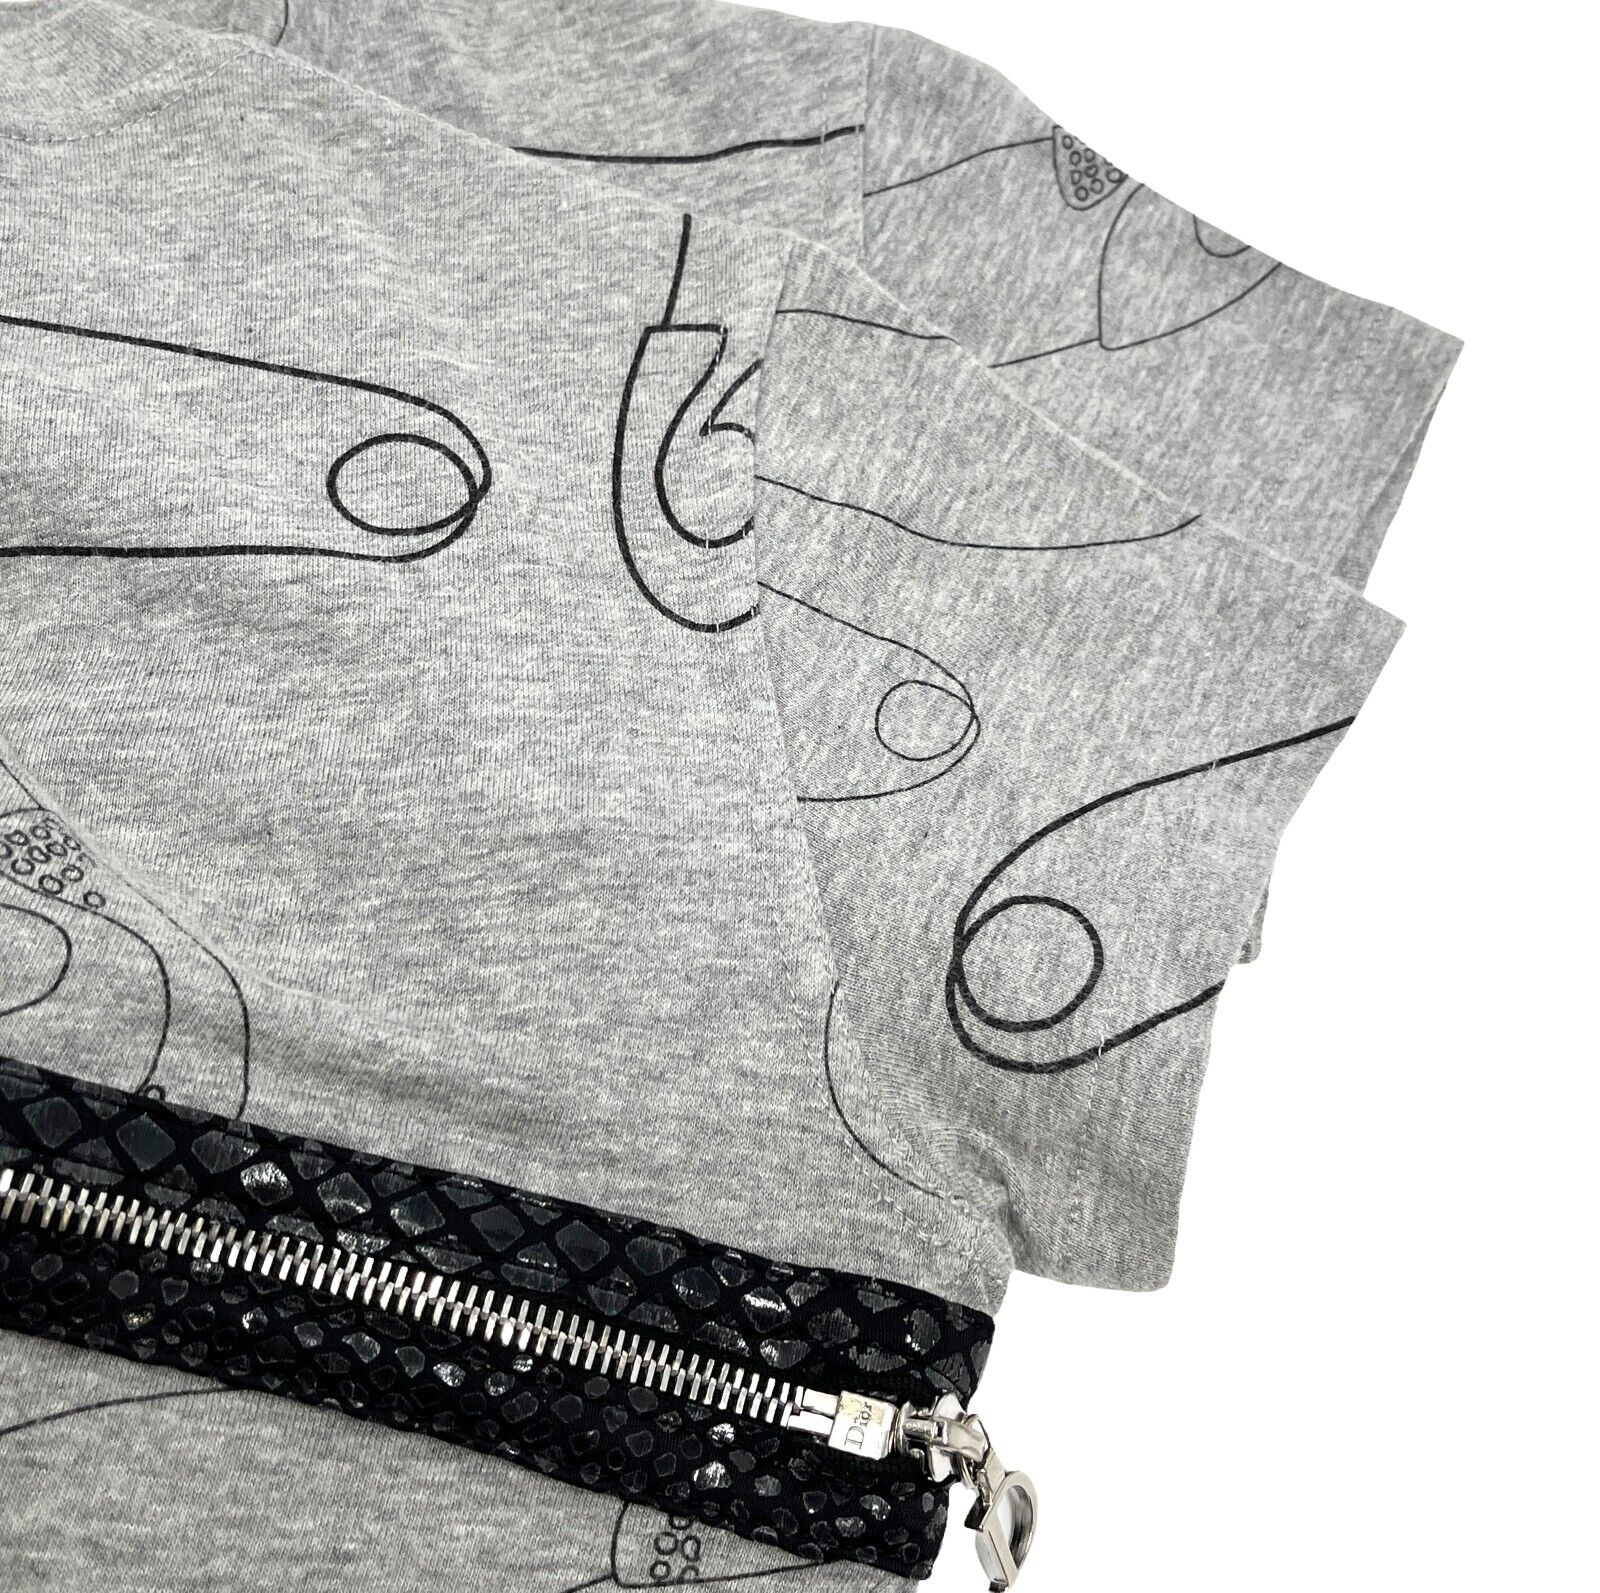 Christian Dior Vintage Logo T-shirts #38 Safety Pin Pattern Top Gray RankAB